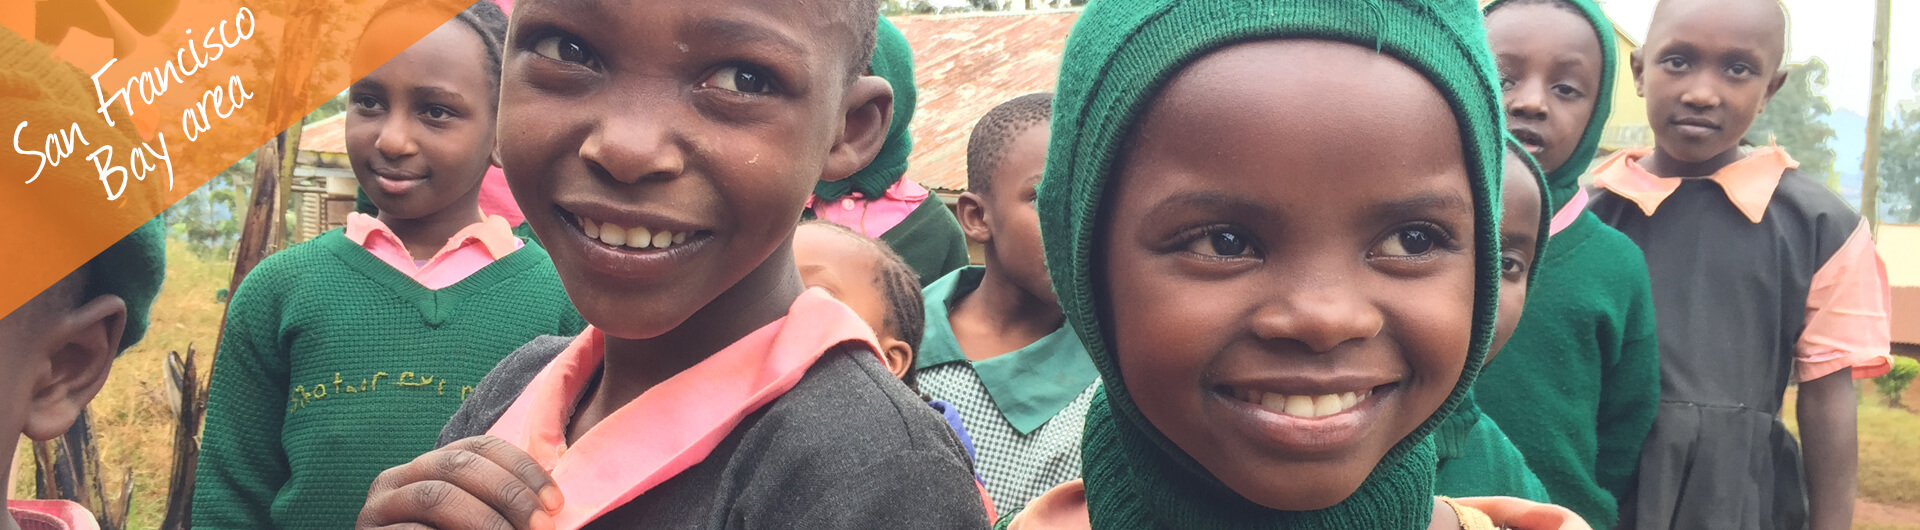 San Francisco Car Donation Banner | African Children Smiling Wearing School Uniforms